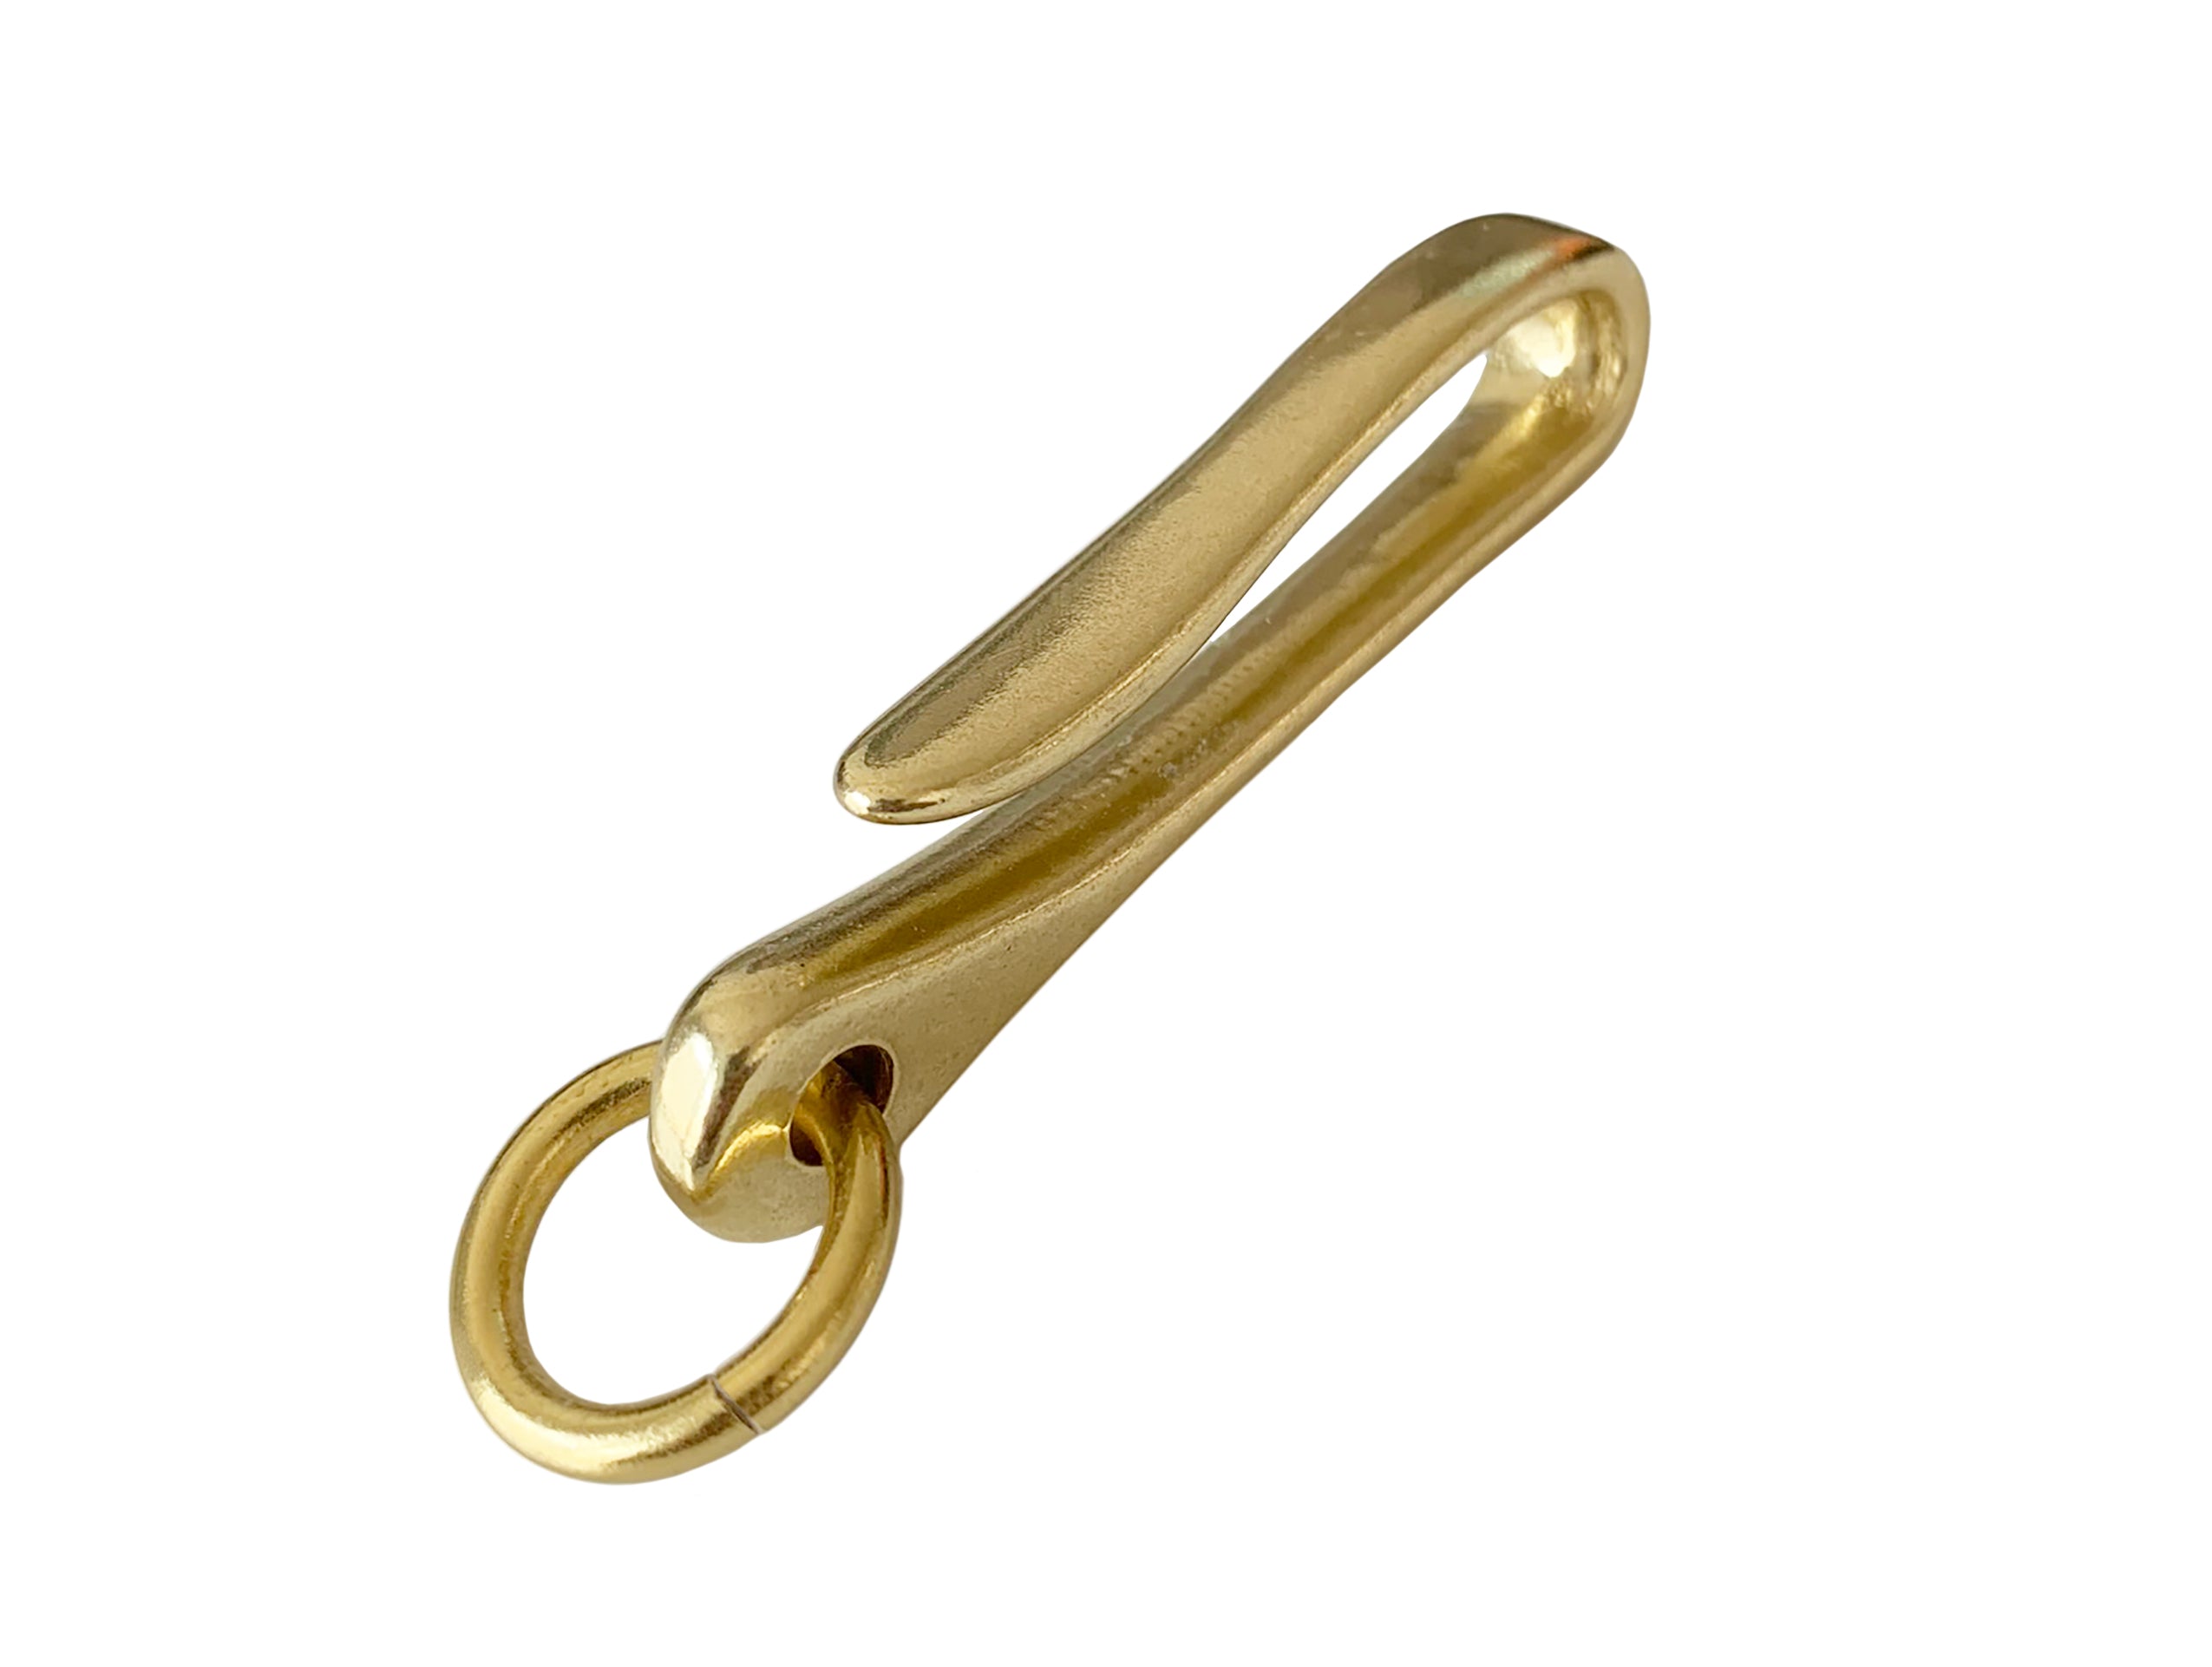 Metal Alloy Hook Keychain, Japanese Hook Key Chain